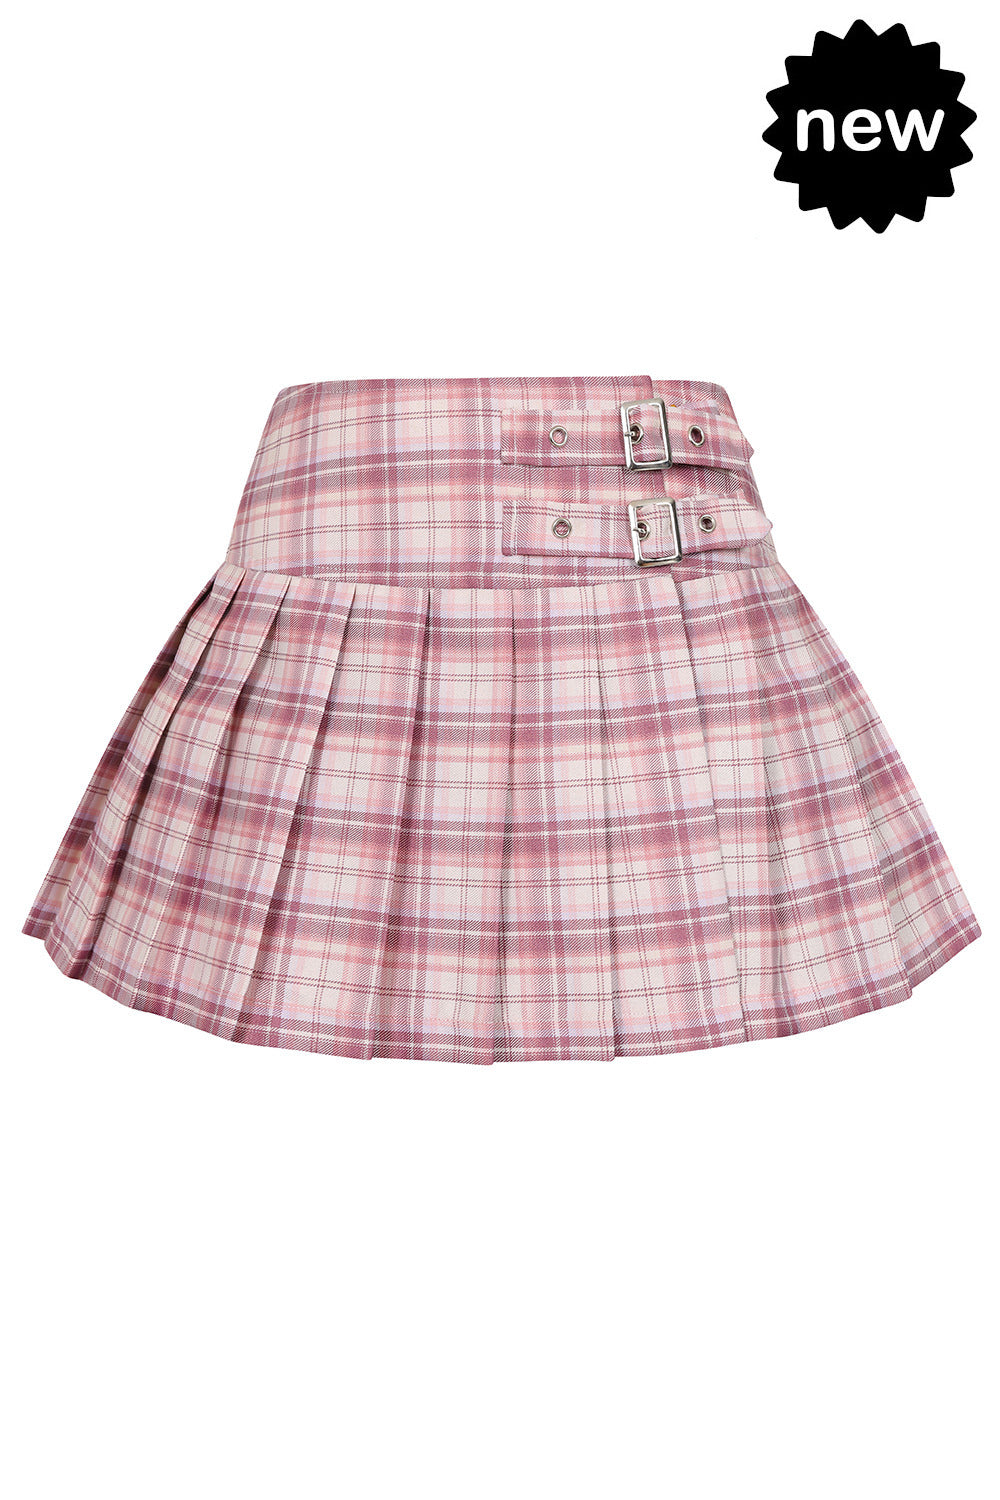 Pink tartan mini skirt with buckles 